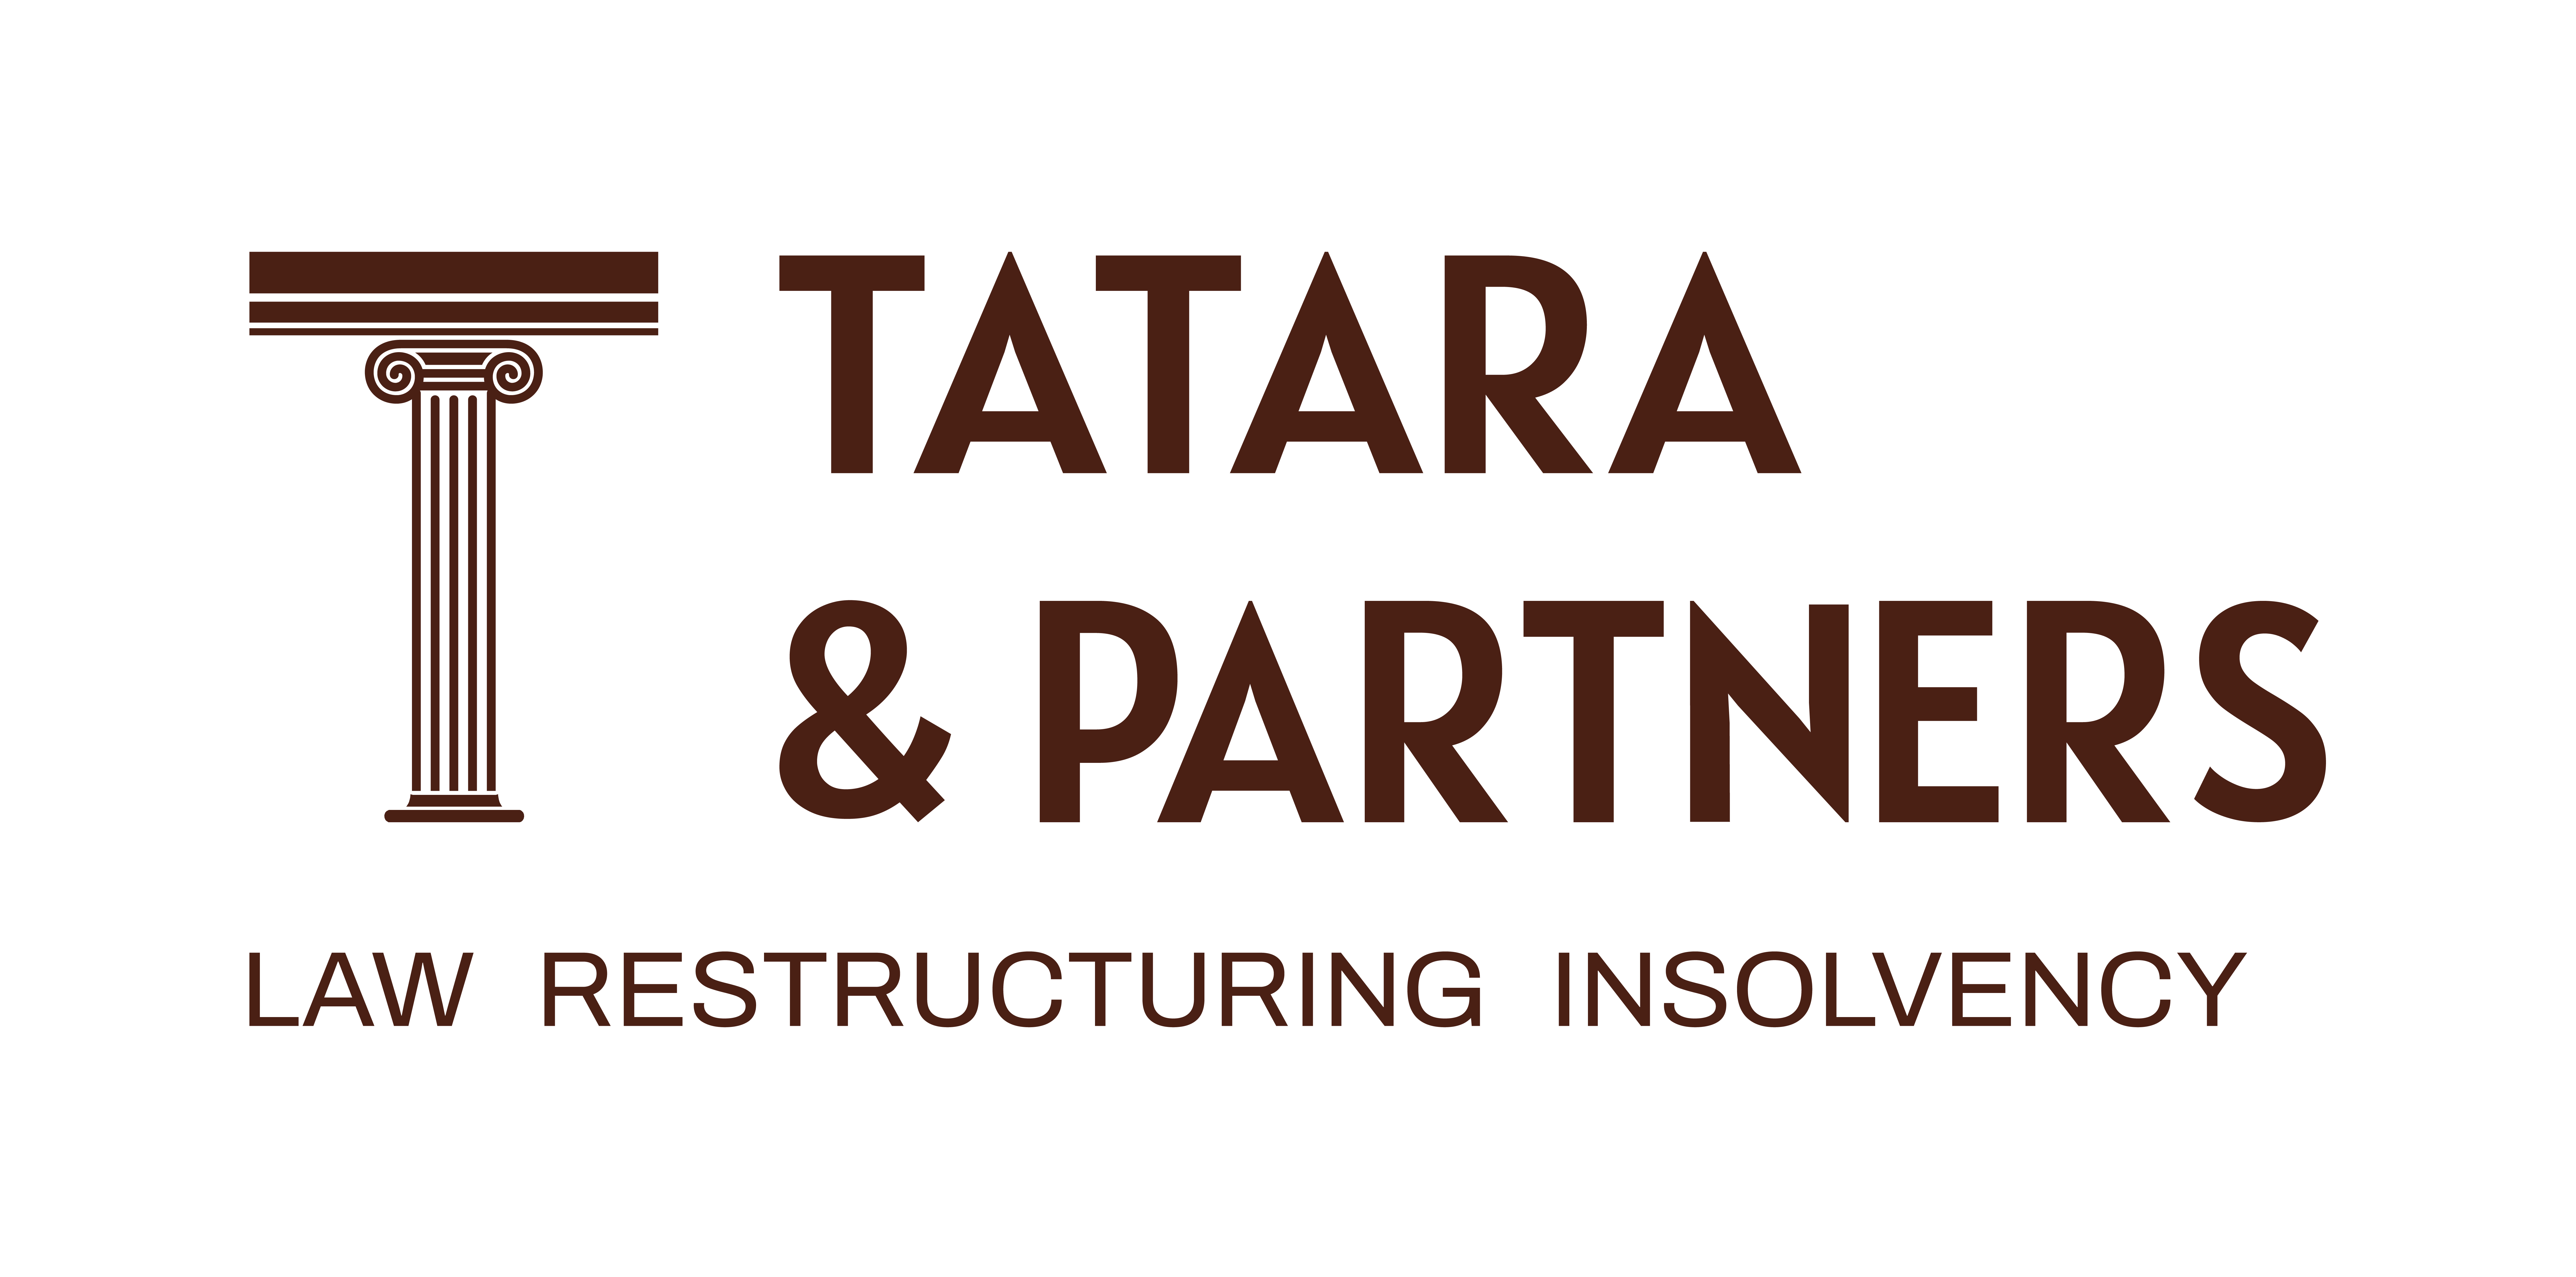 Tatara & Partners logo